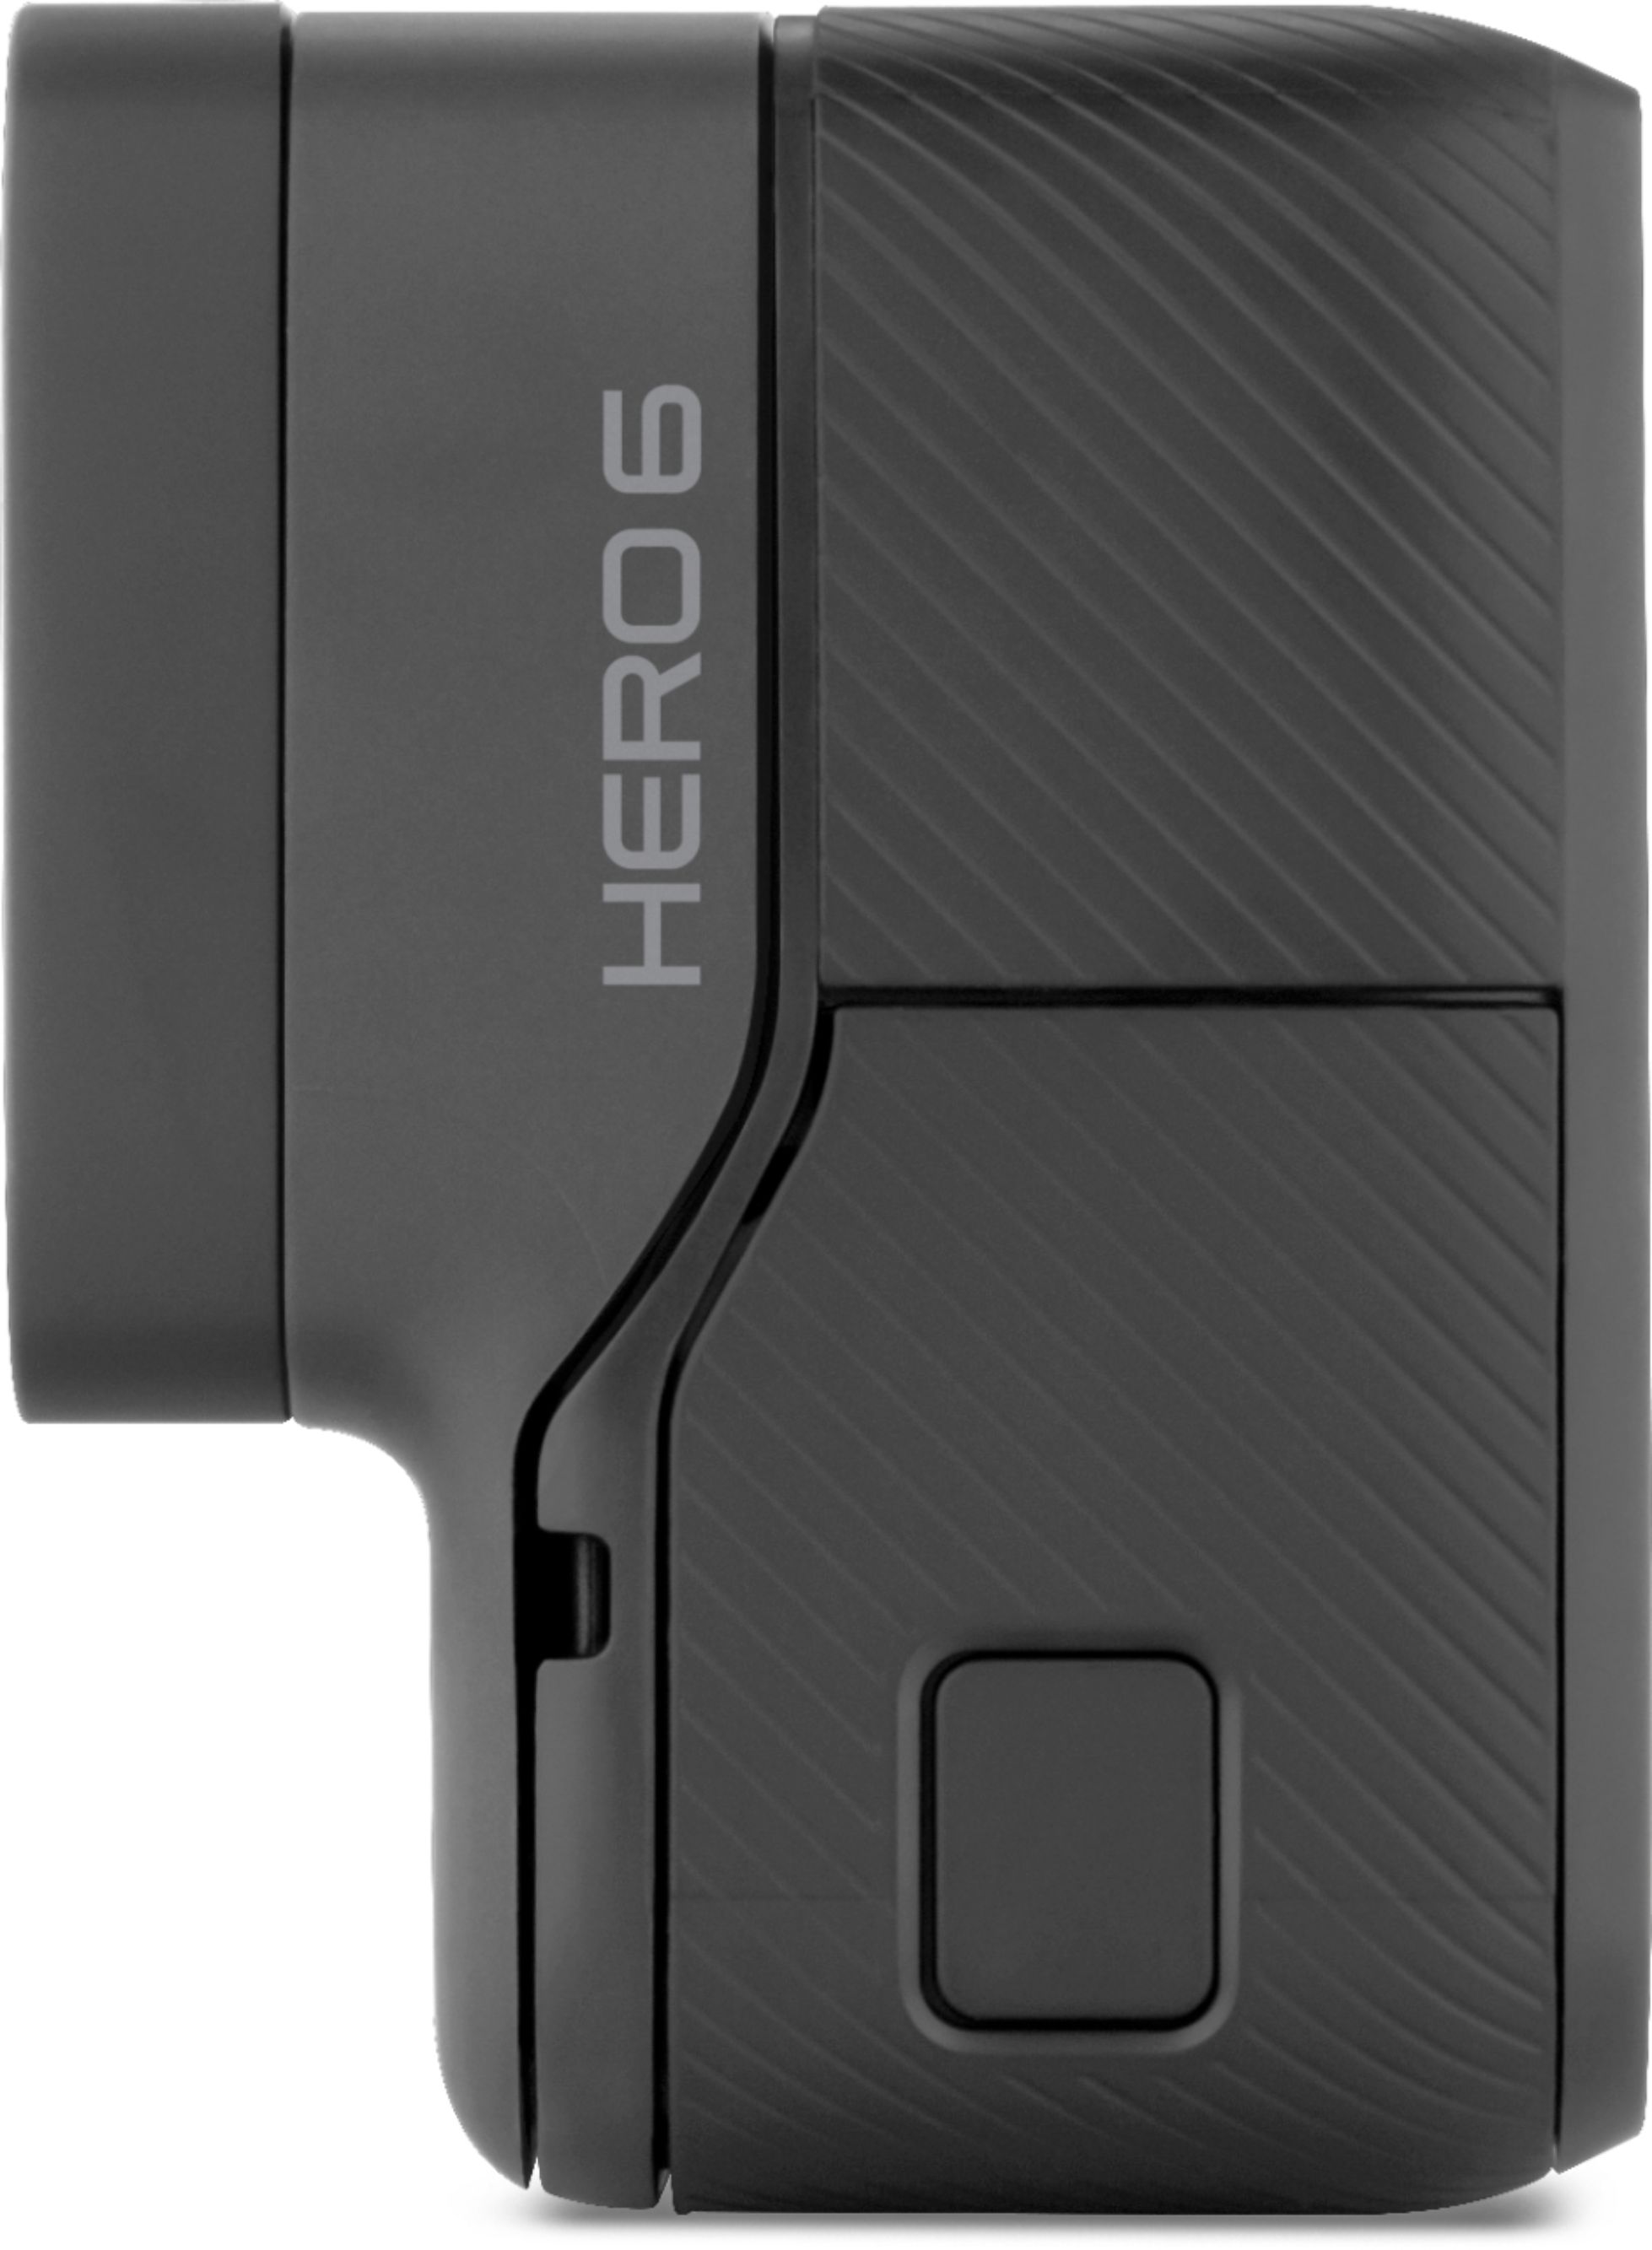 Best Buy: GoPro HERO6 Black 4K Action Camera black CHDHX-601